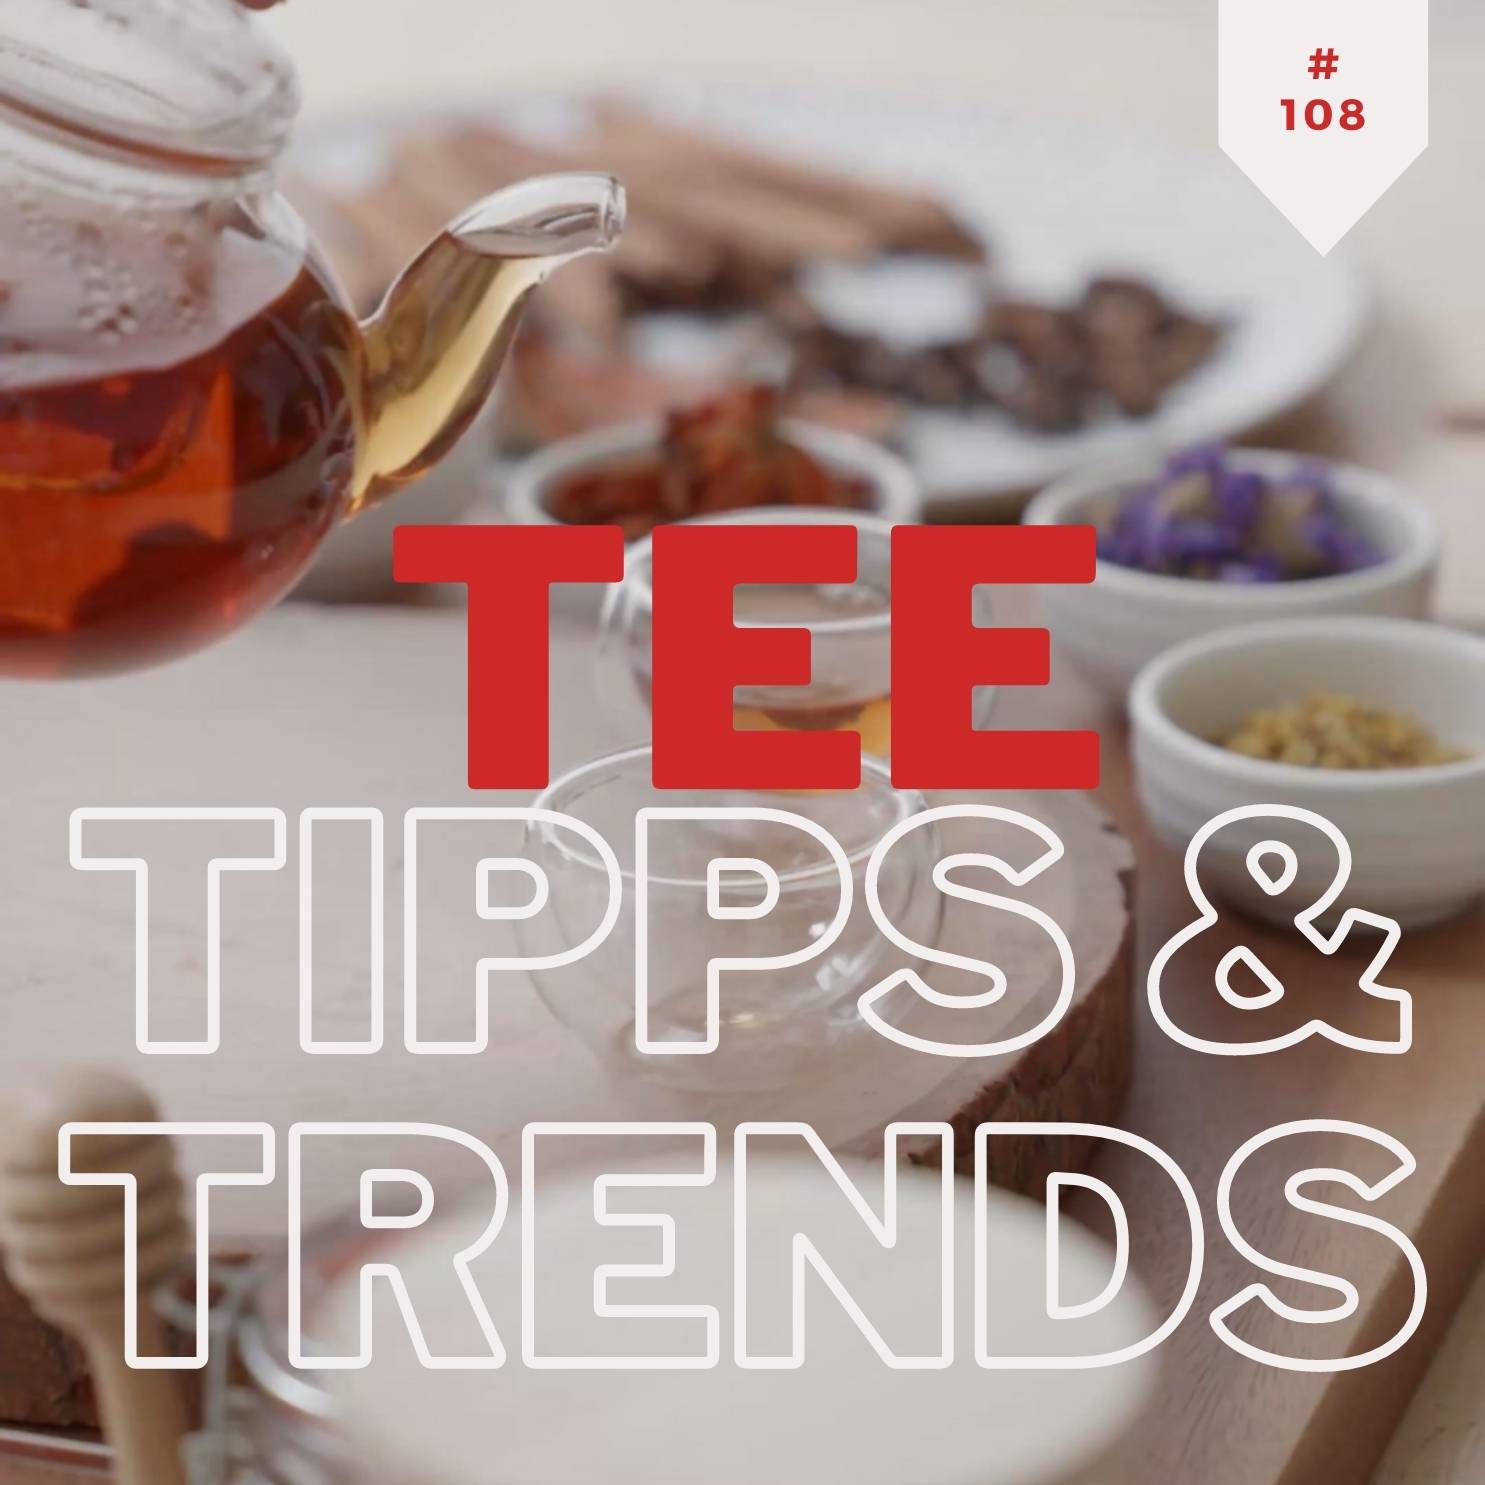 Tee in der Gastro - Teil 2: Top 10 Tee Trends & wichtige Tee-Tipps im Gastro Alltag